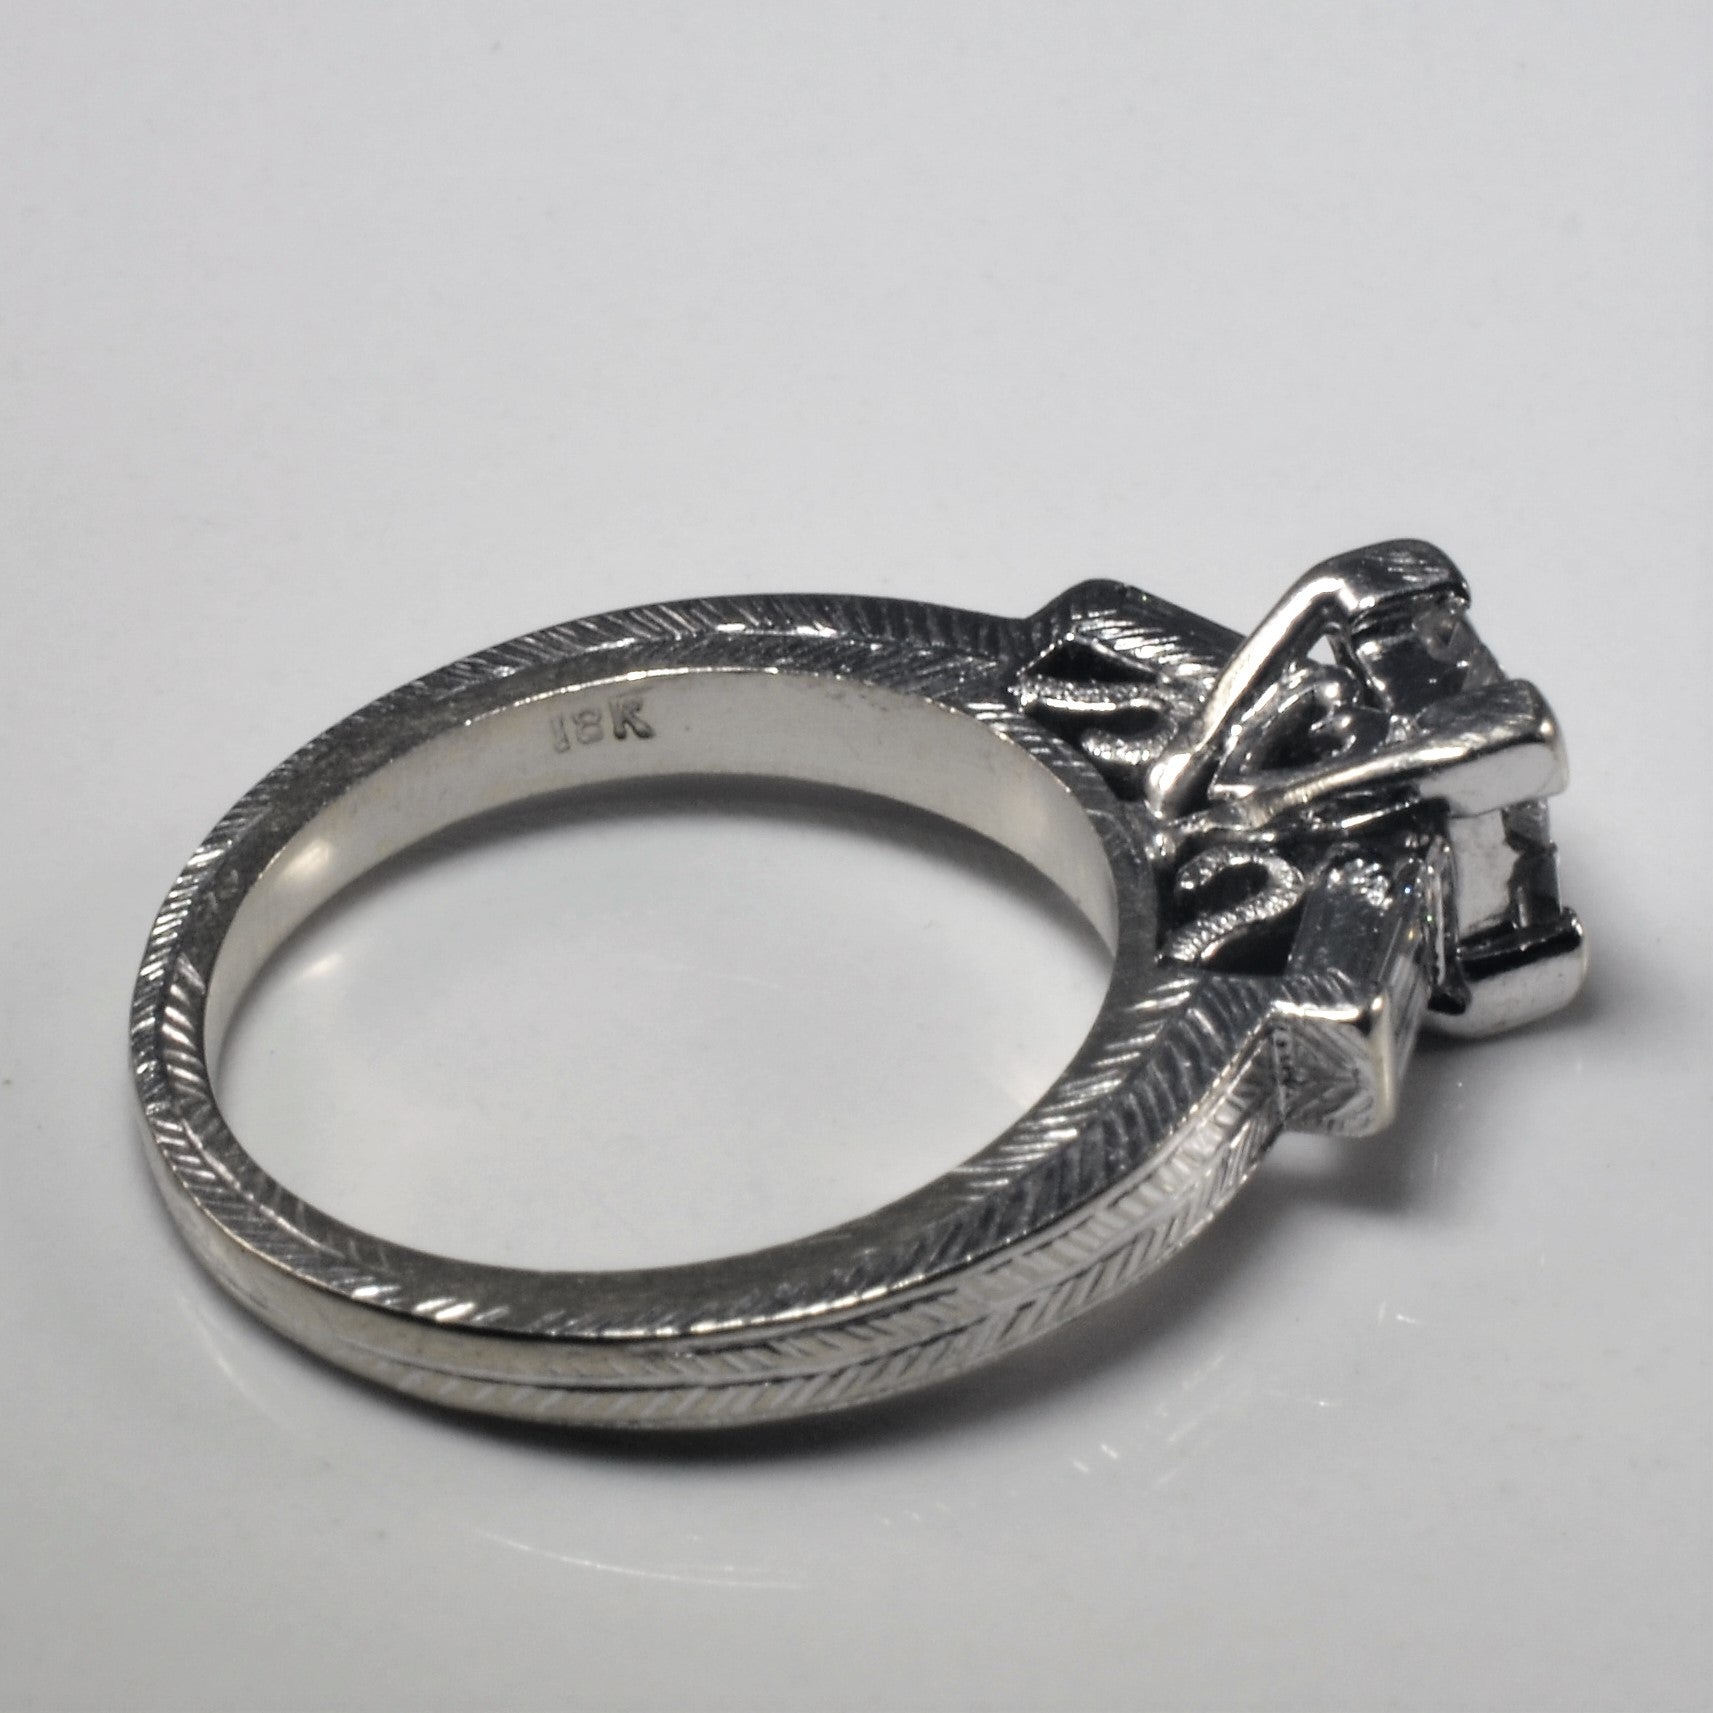 Art Deco Inspired Quad Set Diamond Ring | 0.84ctw | SZ 7 |